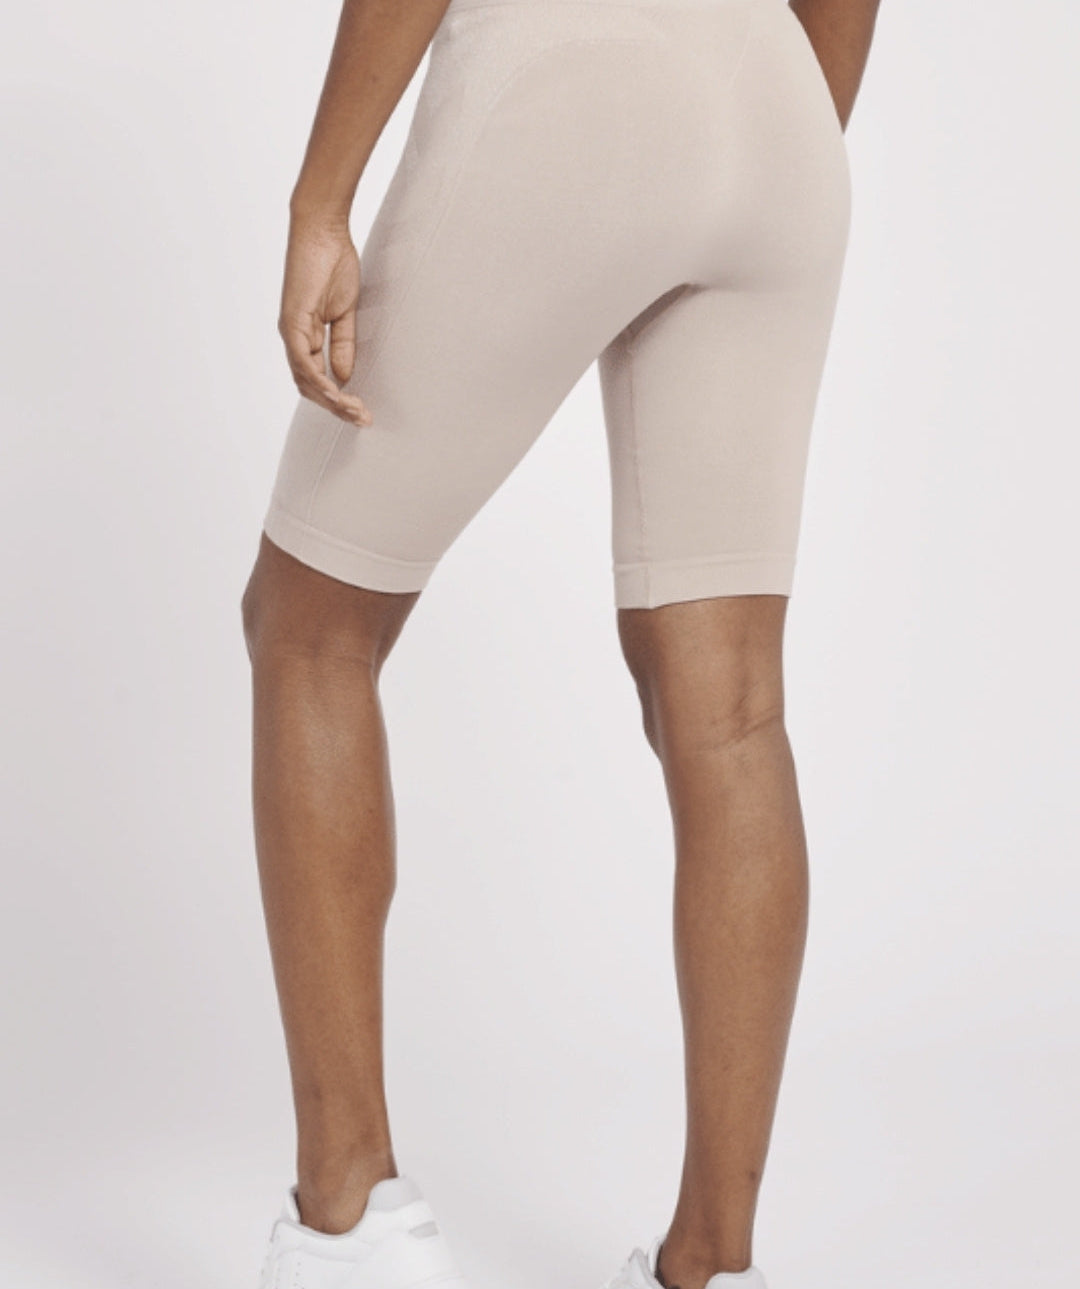 Hummel® - Clea Seamless Shorts (Chateau Gray)